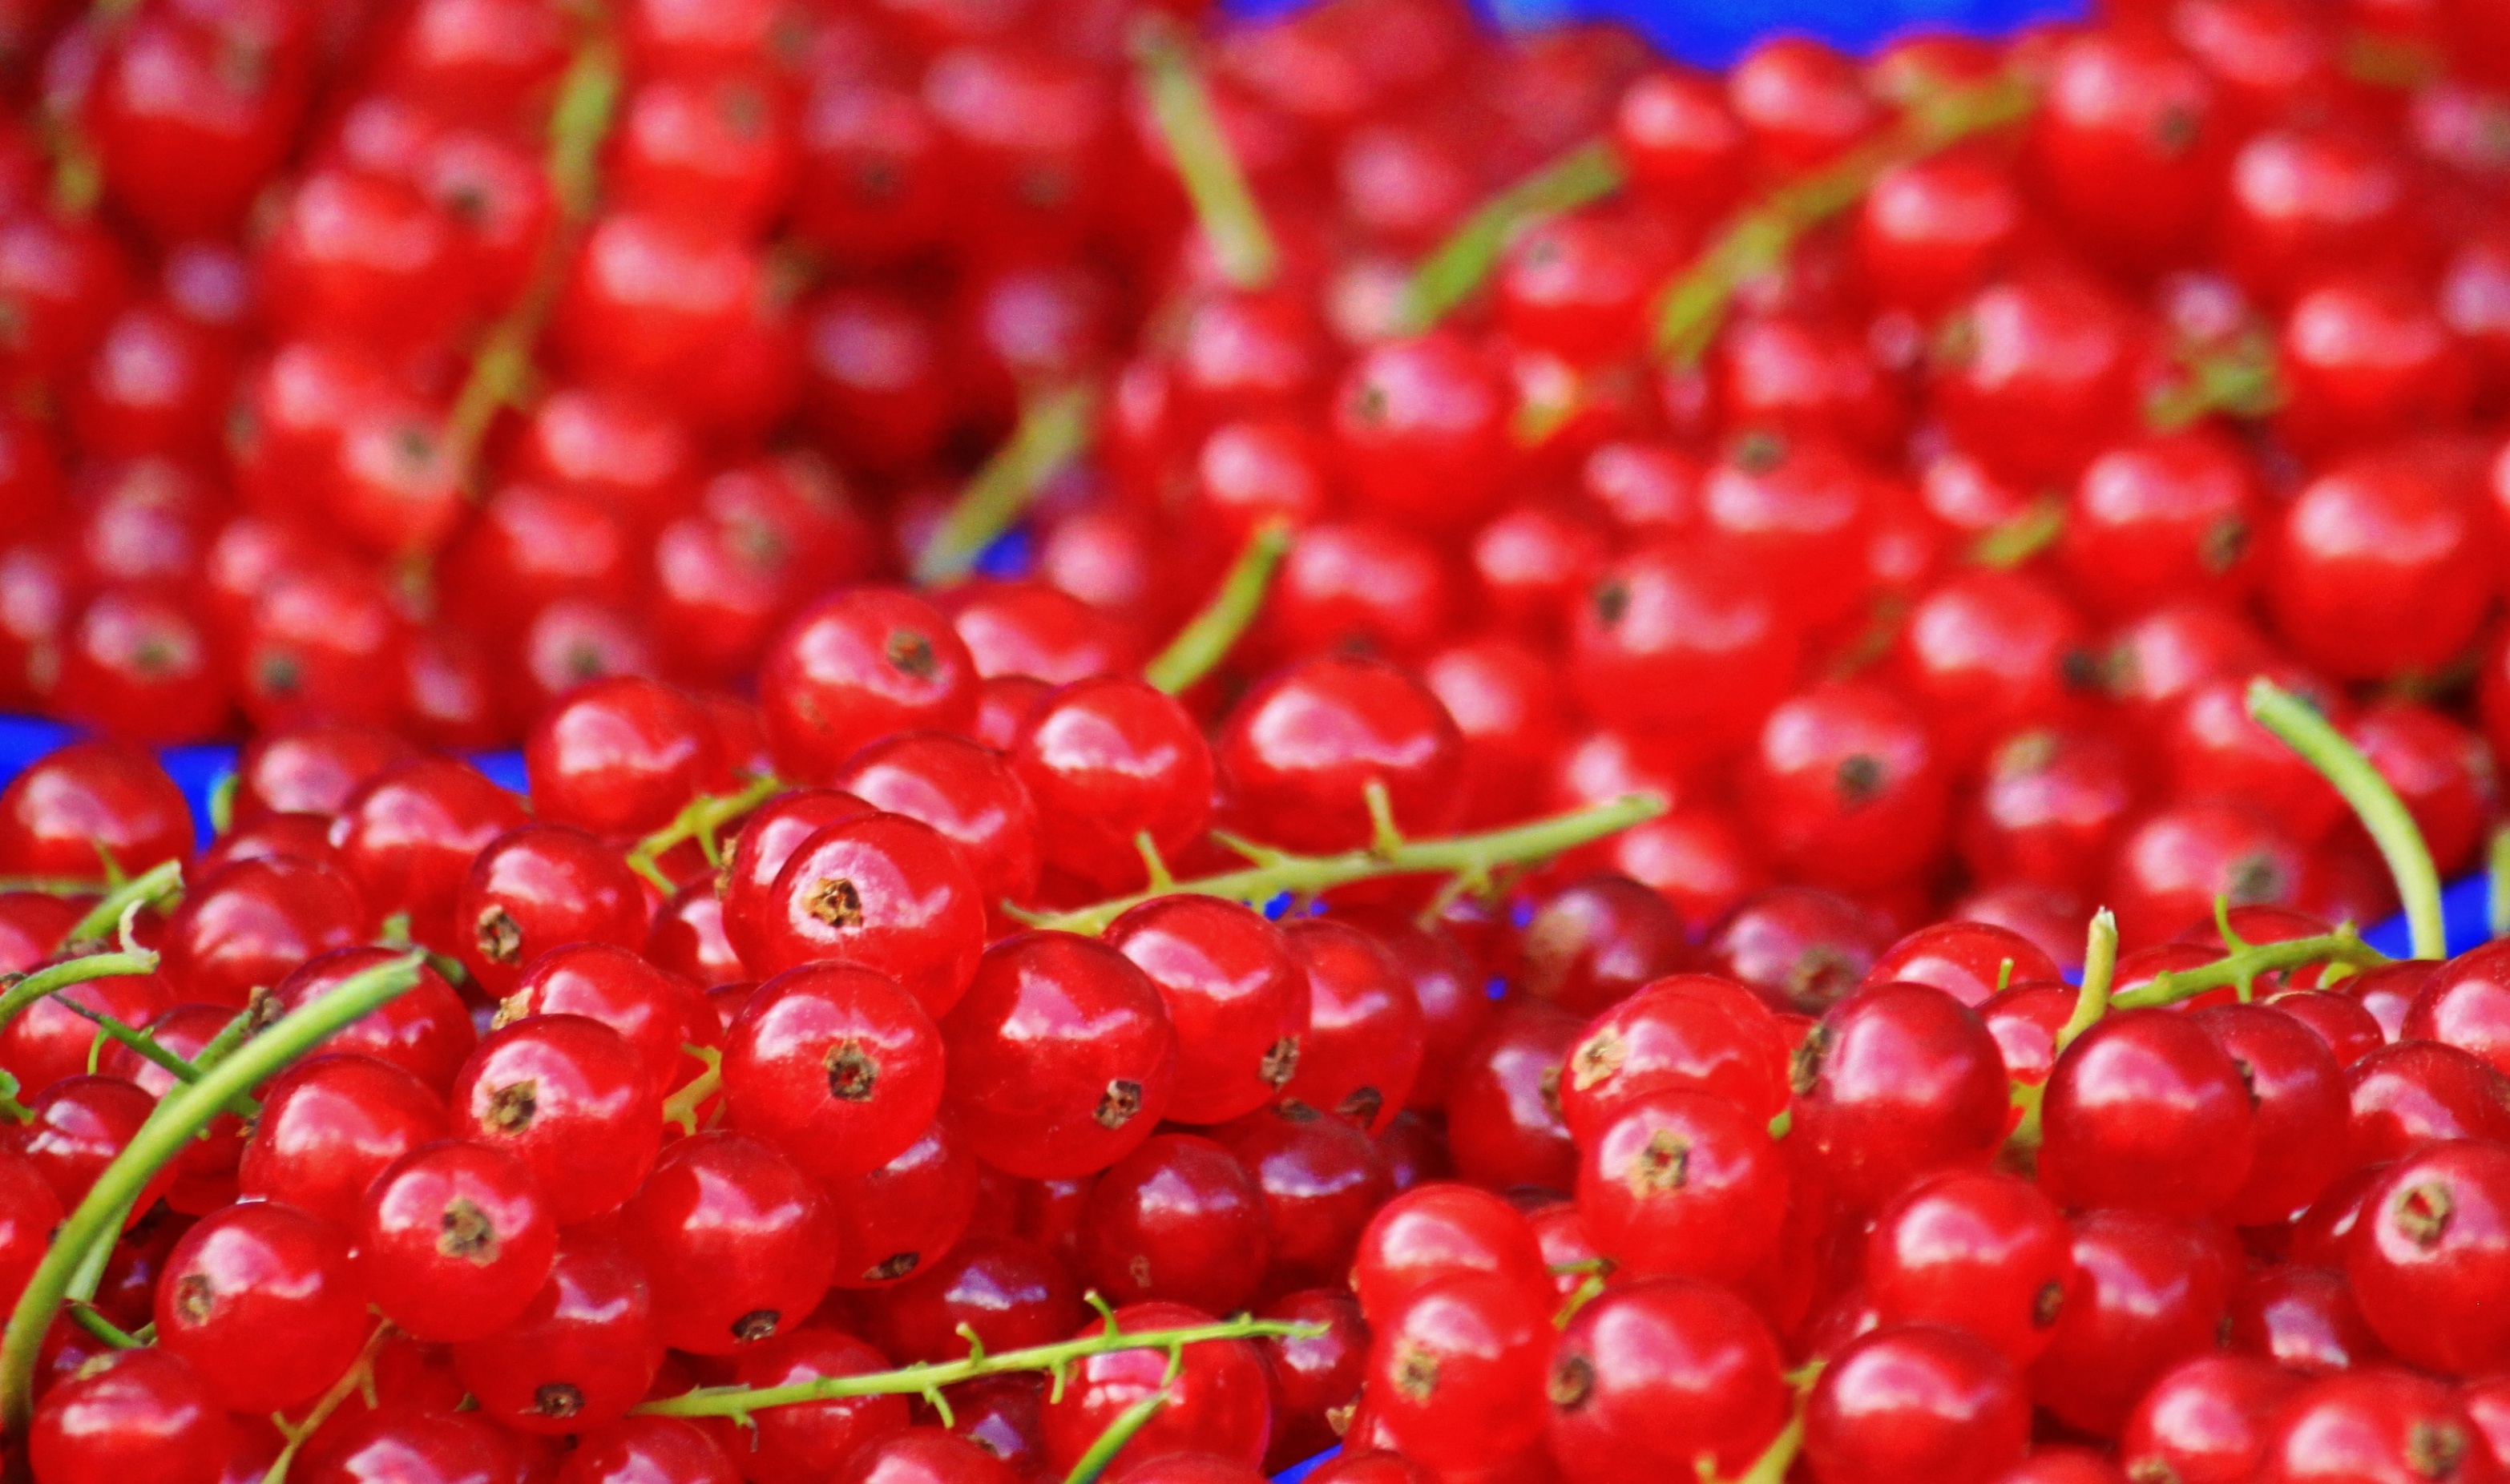 Berries photo